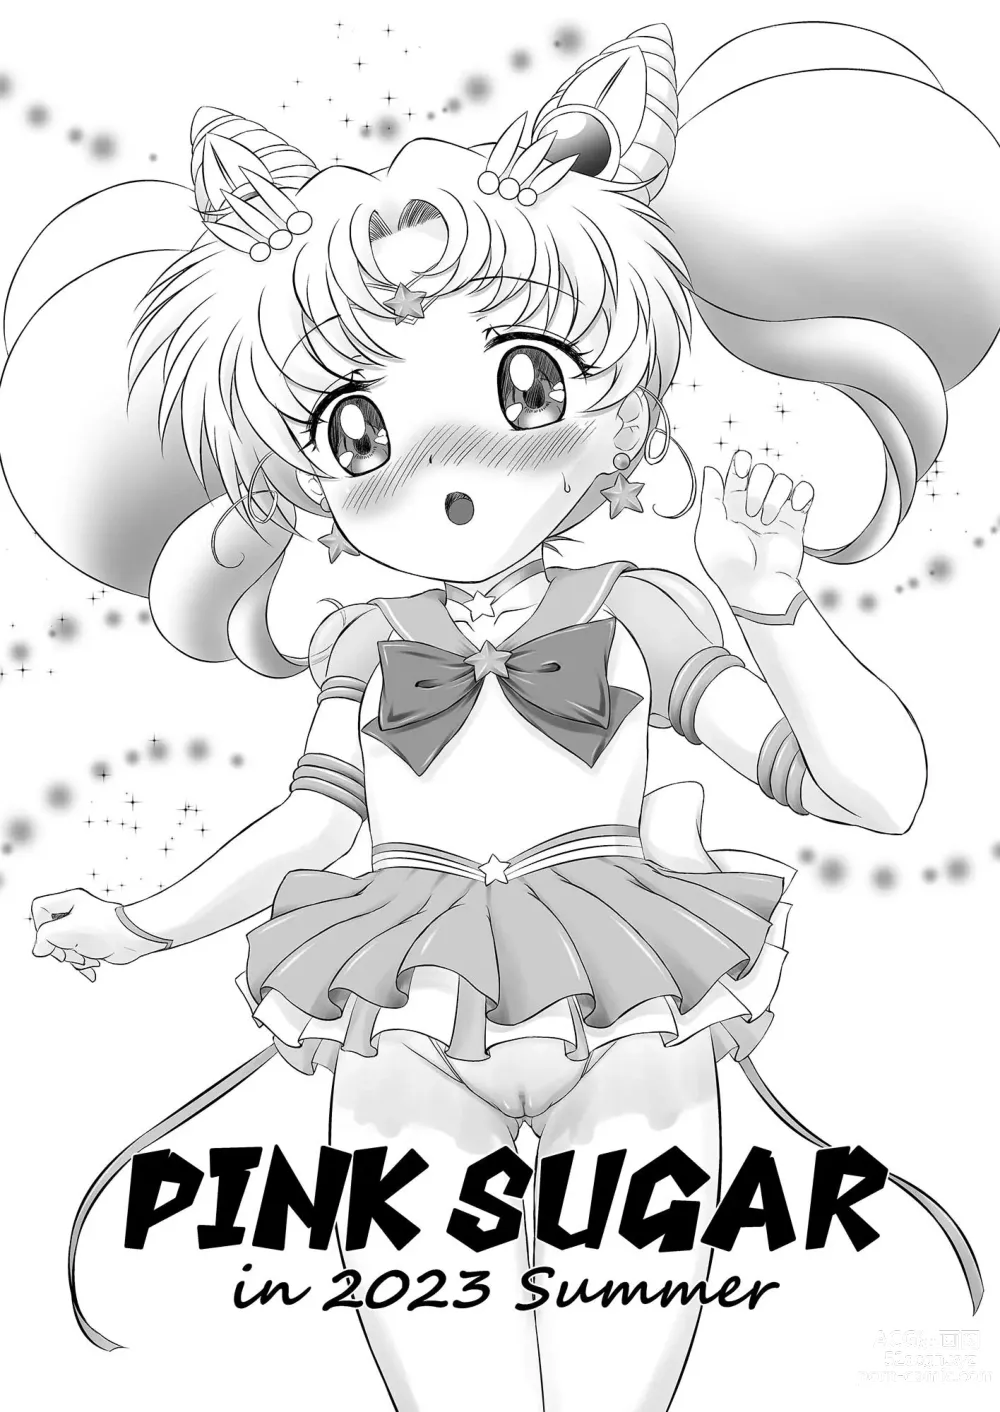 Page 2 of doujinshi PINK SUGAR in 2023 Summer